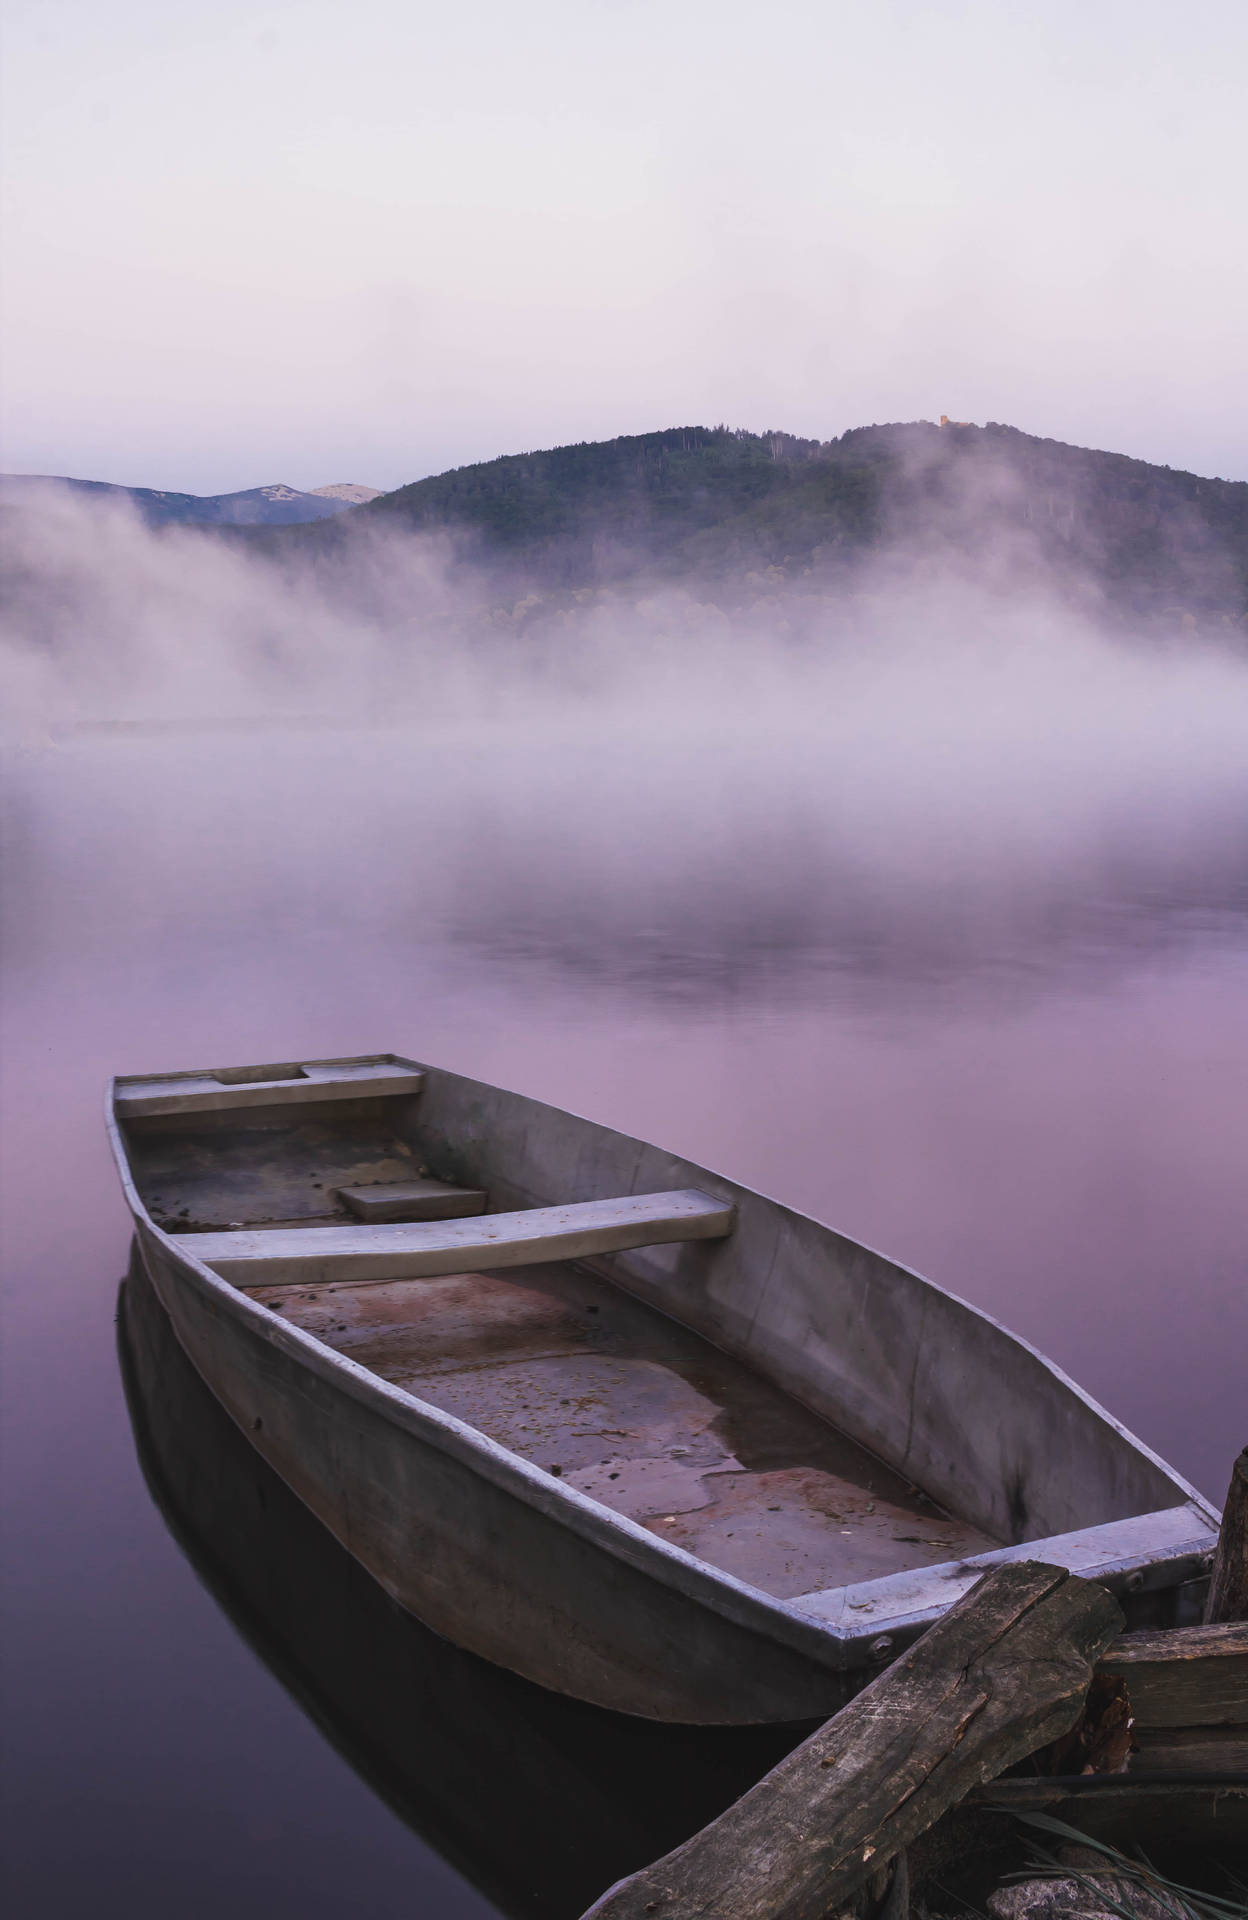 Boat On A Foggy Lake